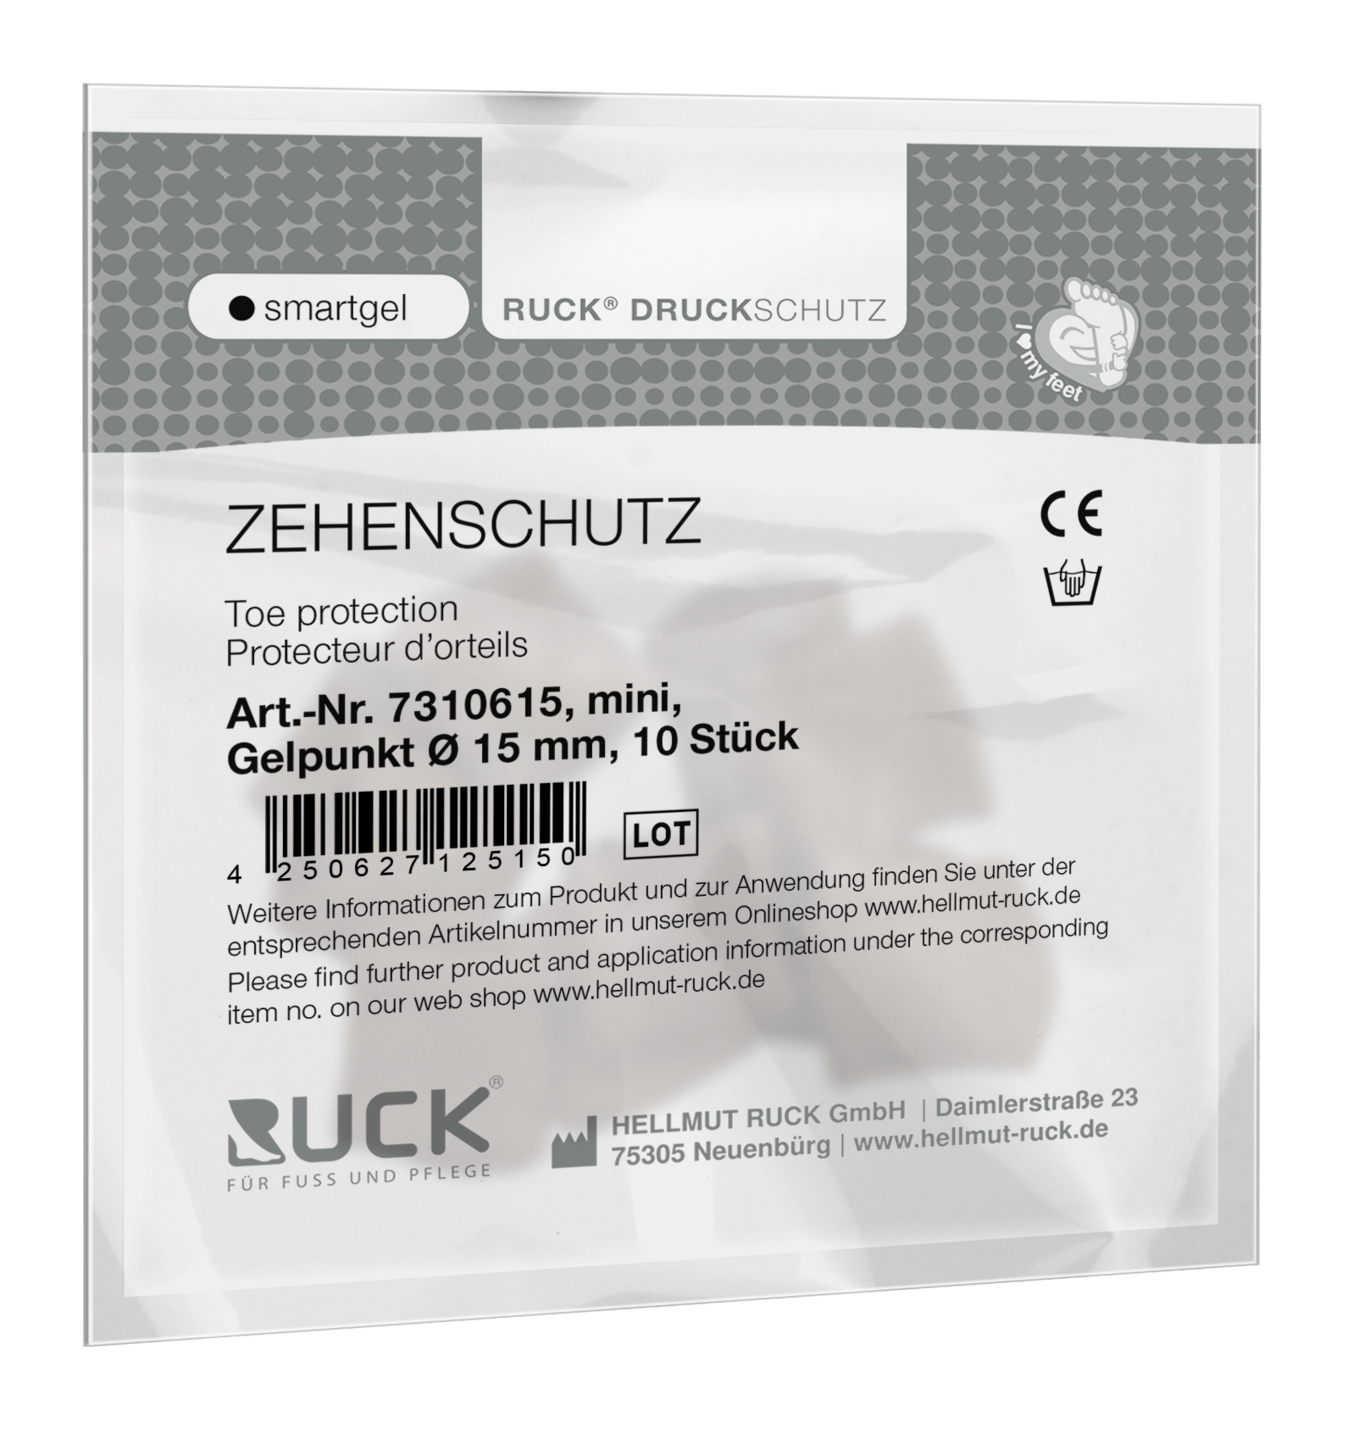 RUCK DRUCKSCHUTZ - Zehenschutz